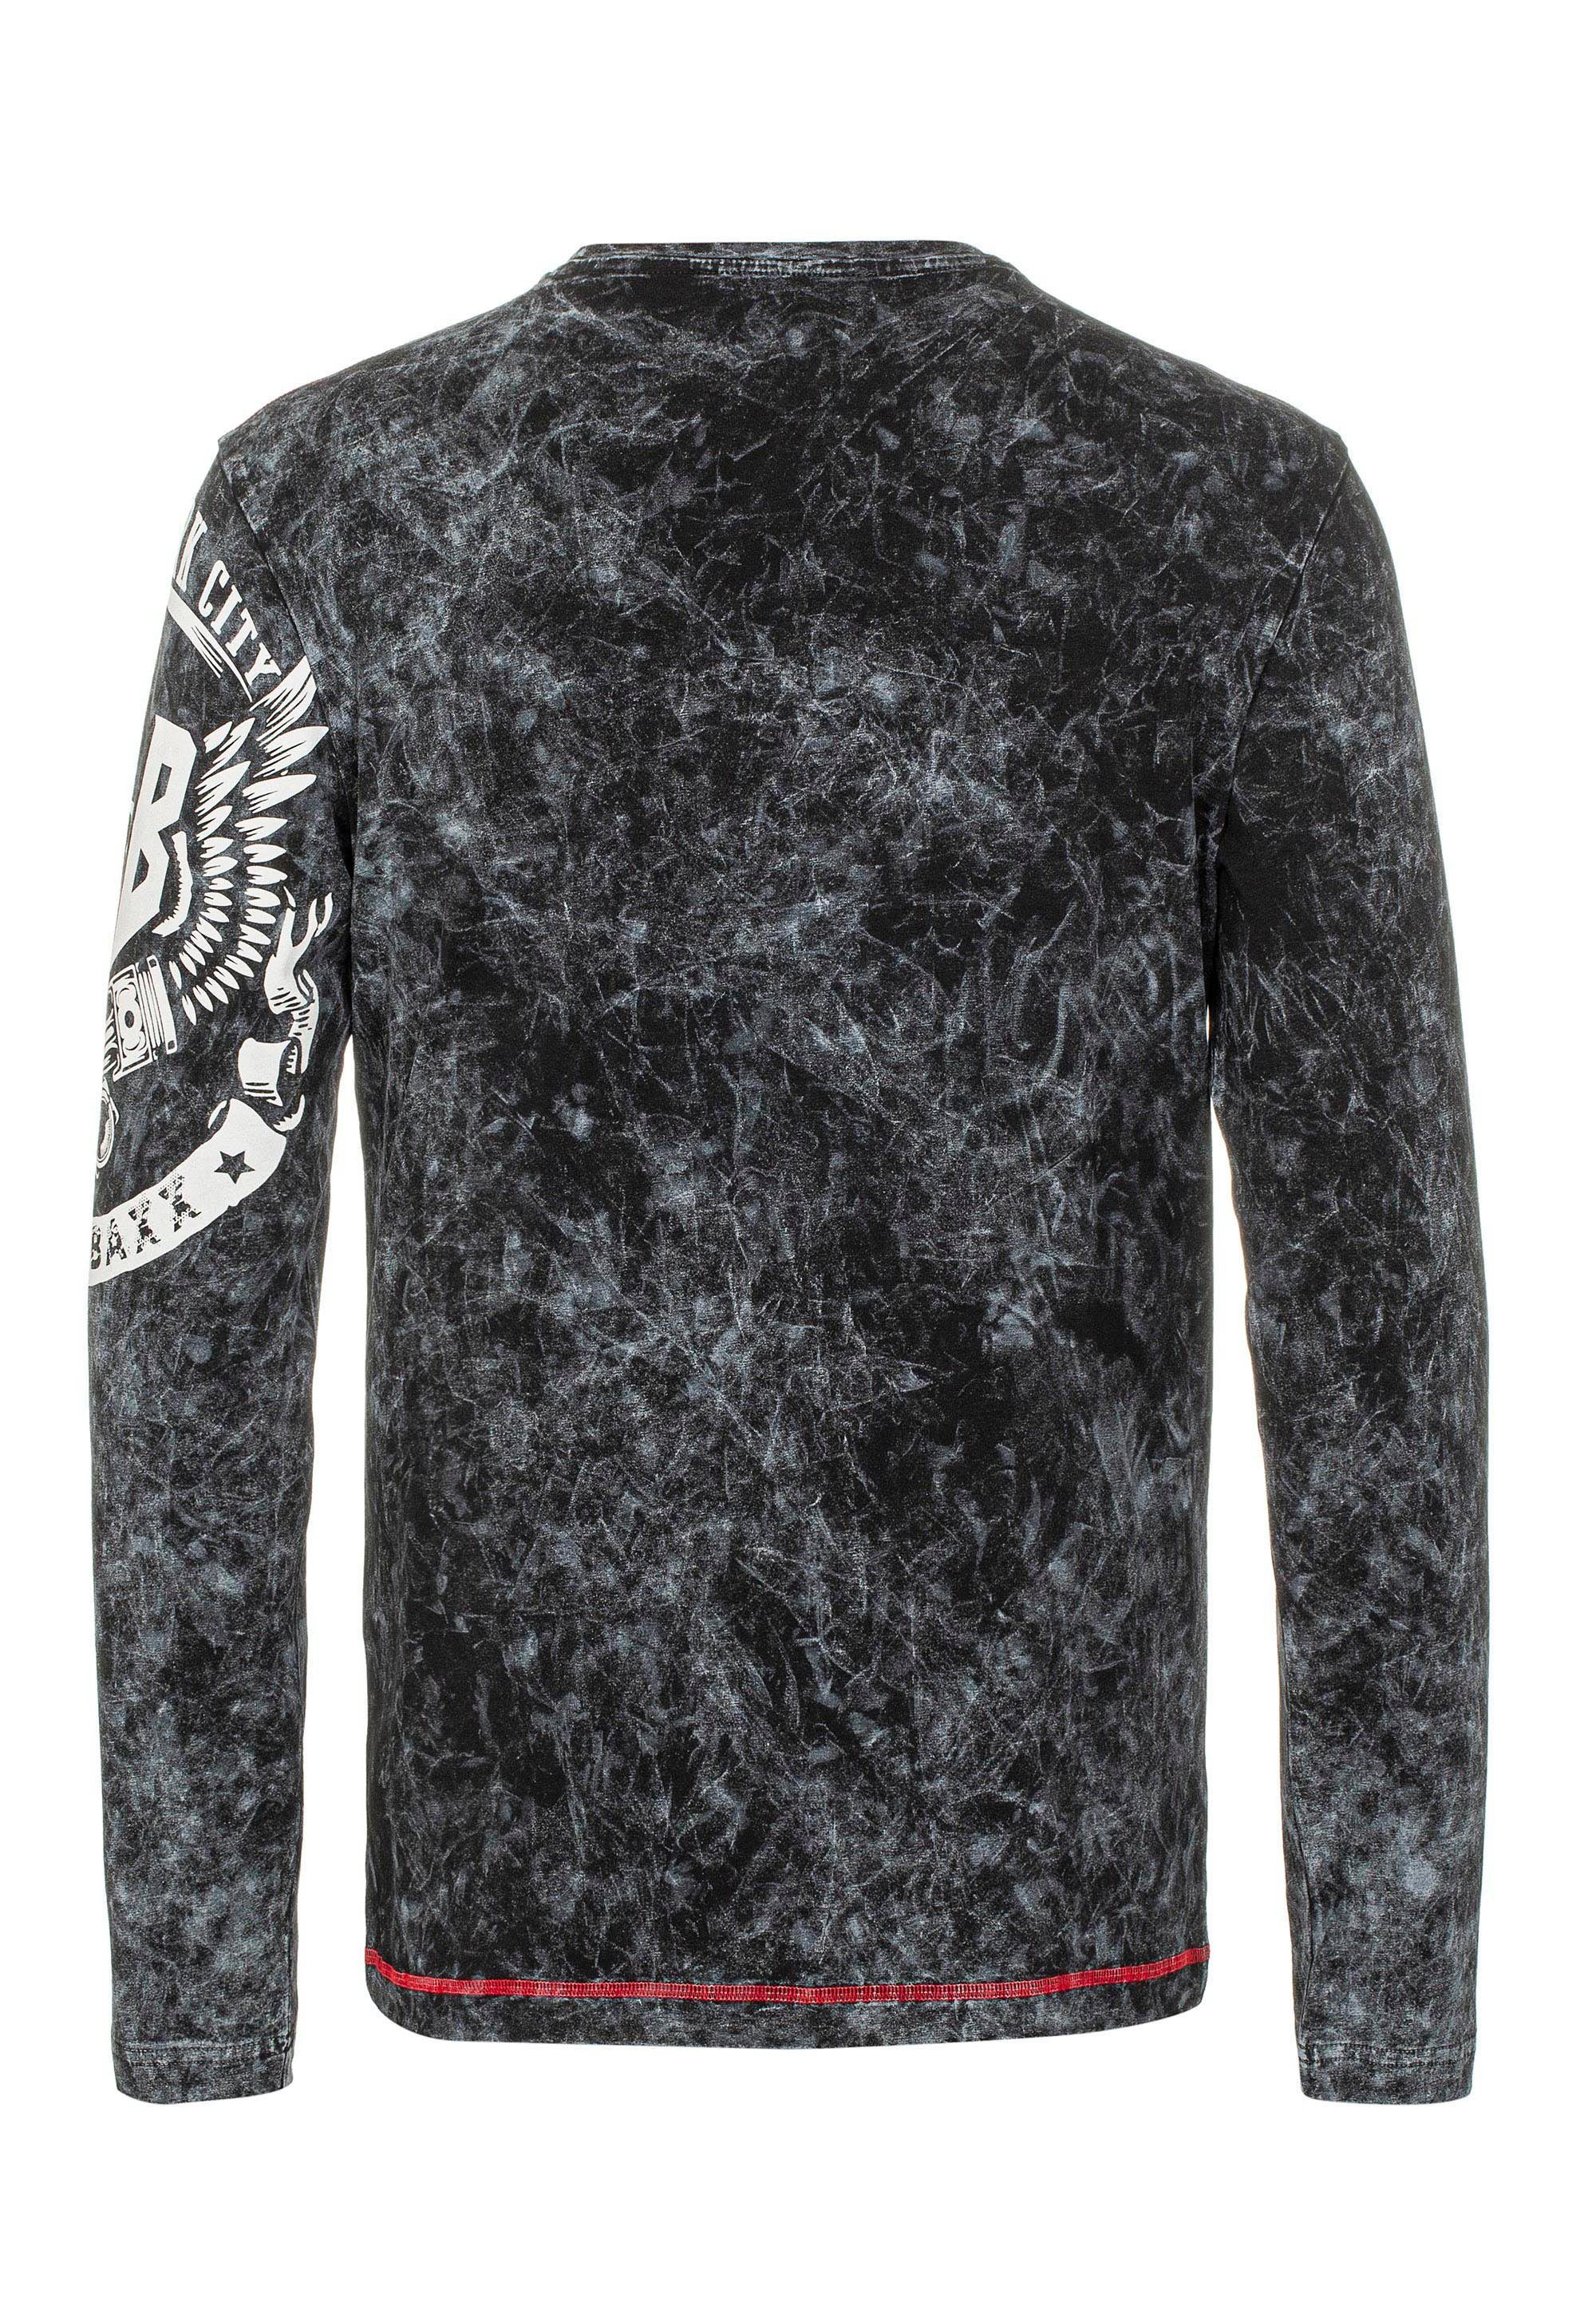 Cipo & Baxx Langarmshirt mit coolem Markenprint schwarz